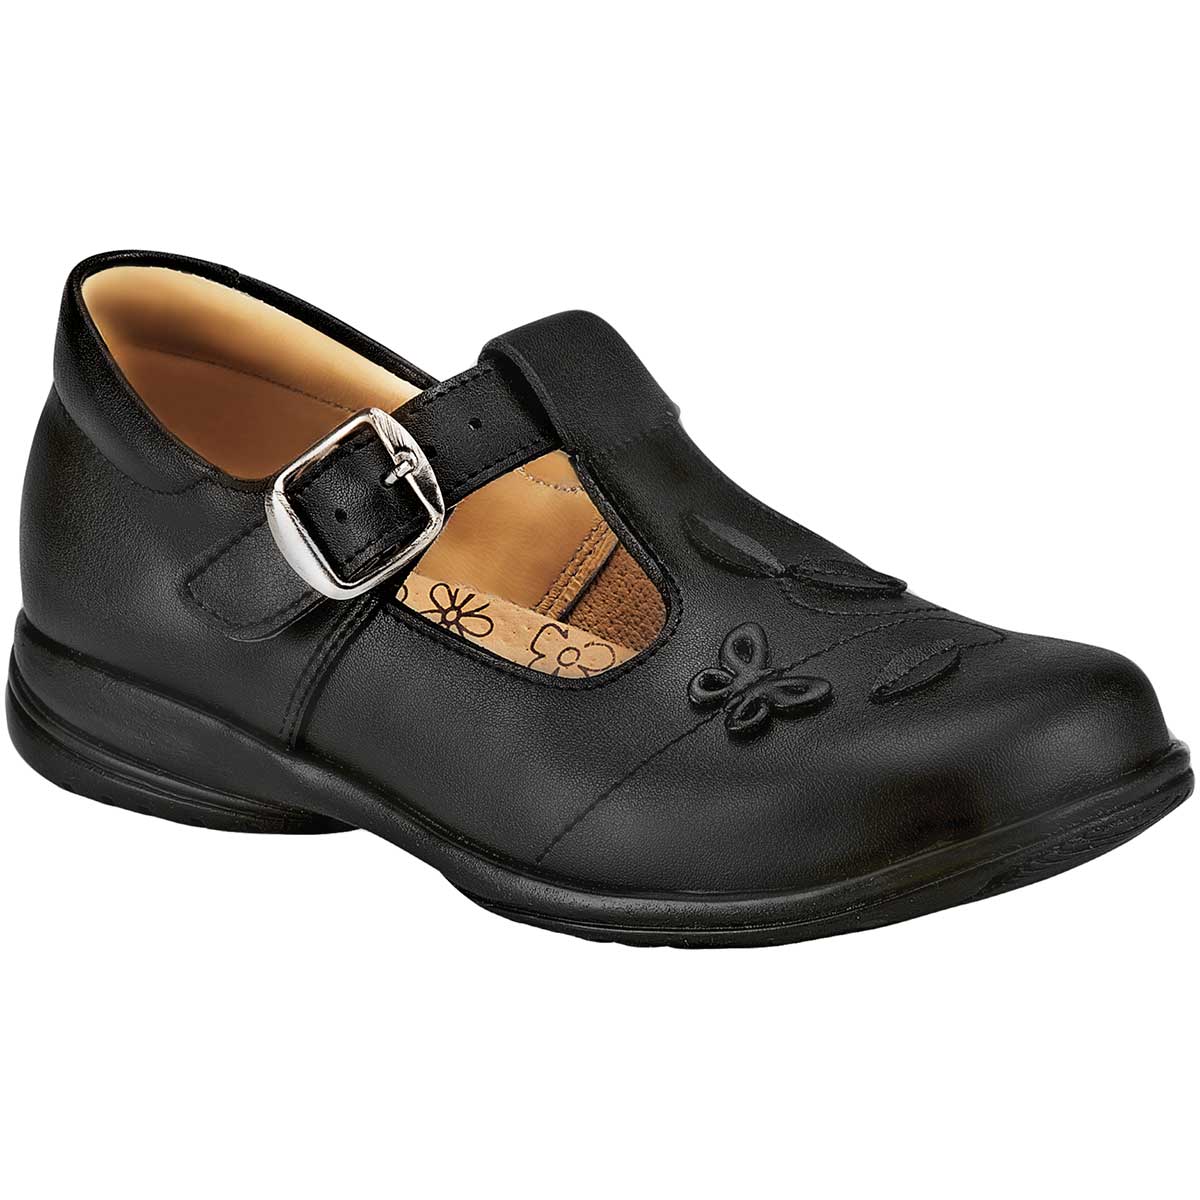 Pakar.com - Mayo: Regalos para mamá | Zapato para niña cod-39291